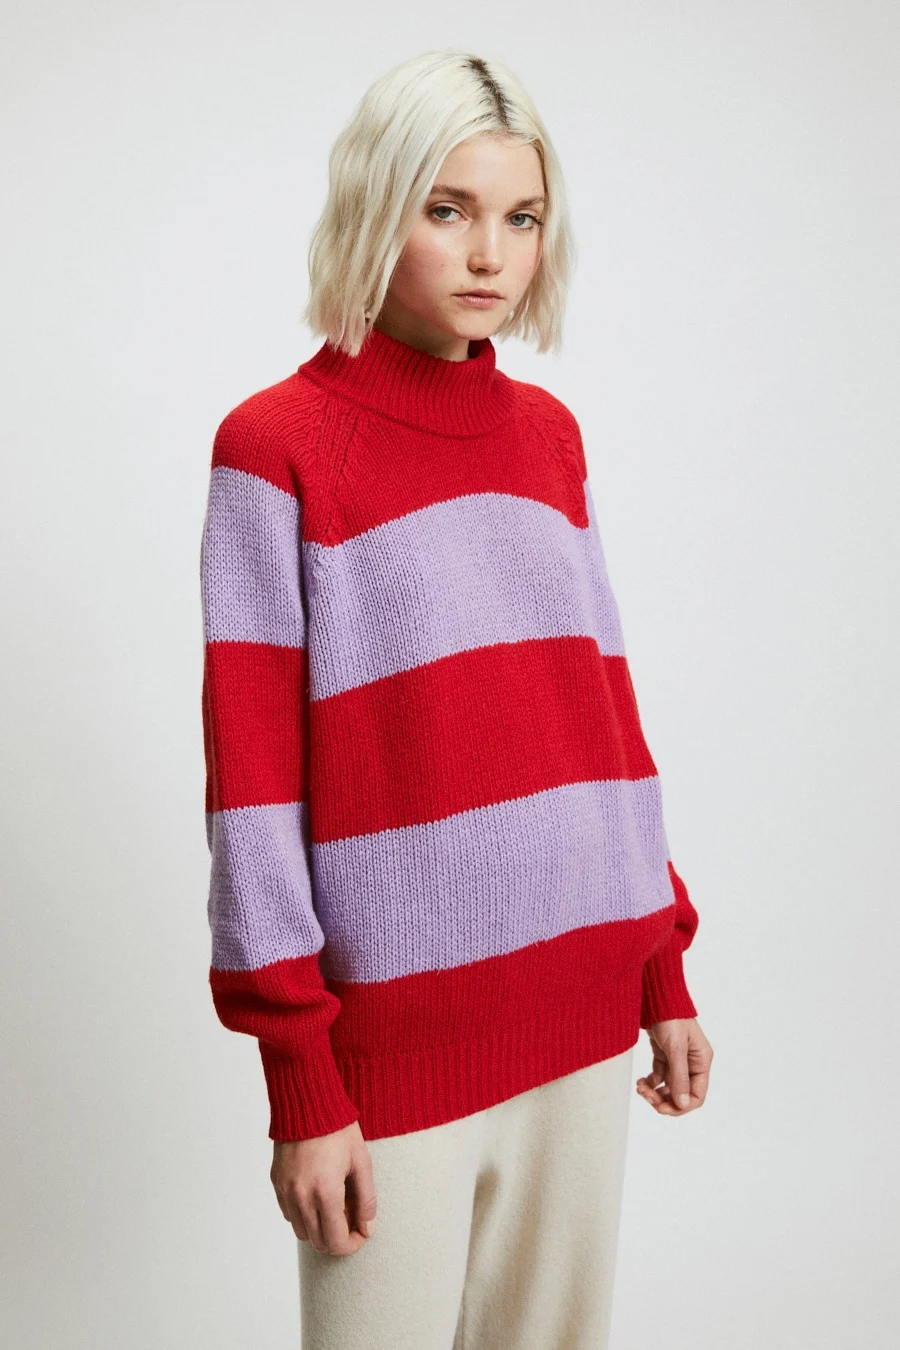 RITA ROW - Waite Sweater - Red/Lilac